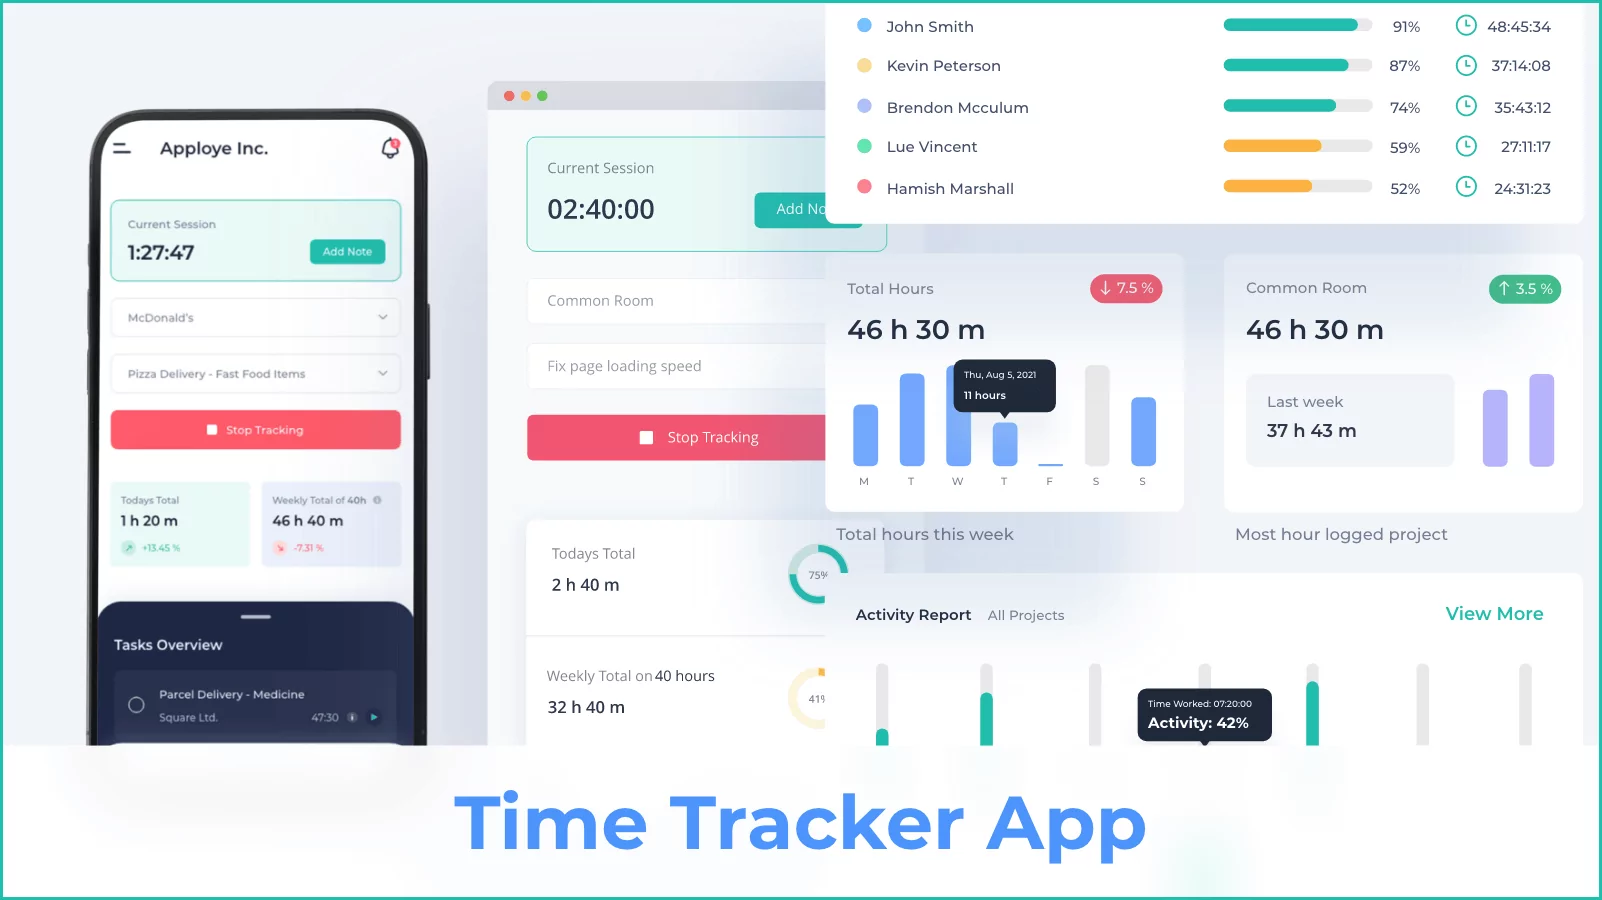 Apploye's time tracker app view